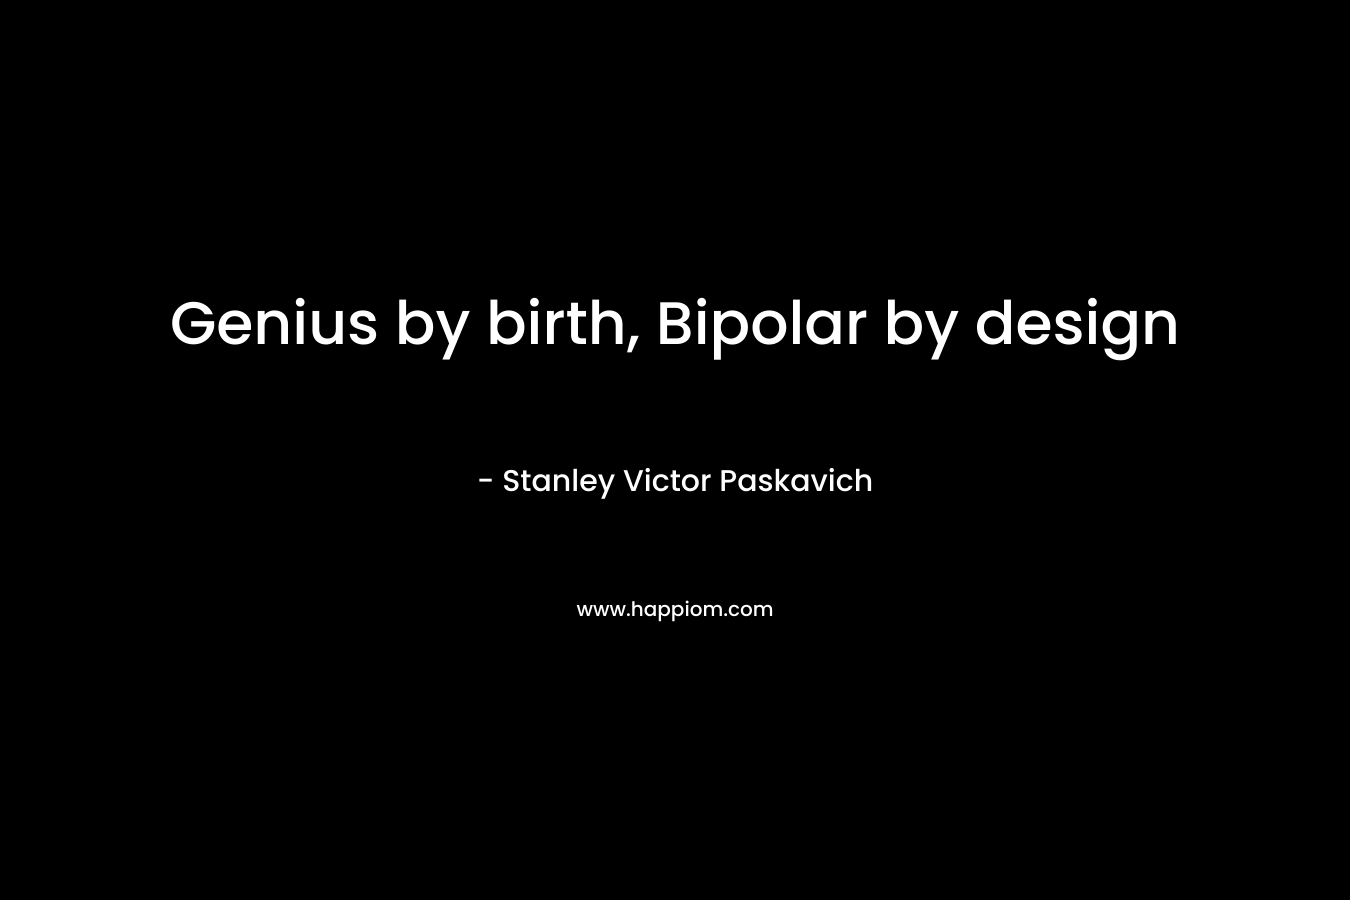 Genius by birth, Bipolar by design